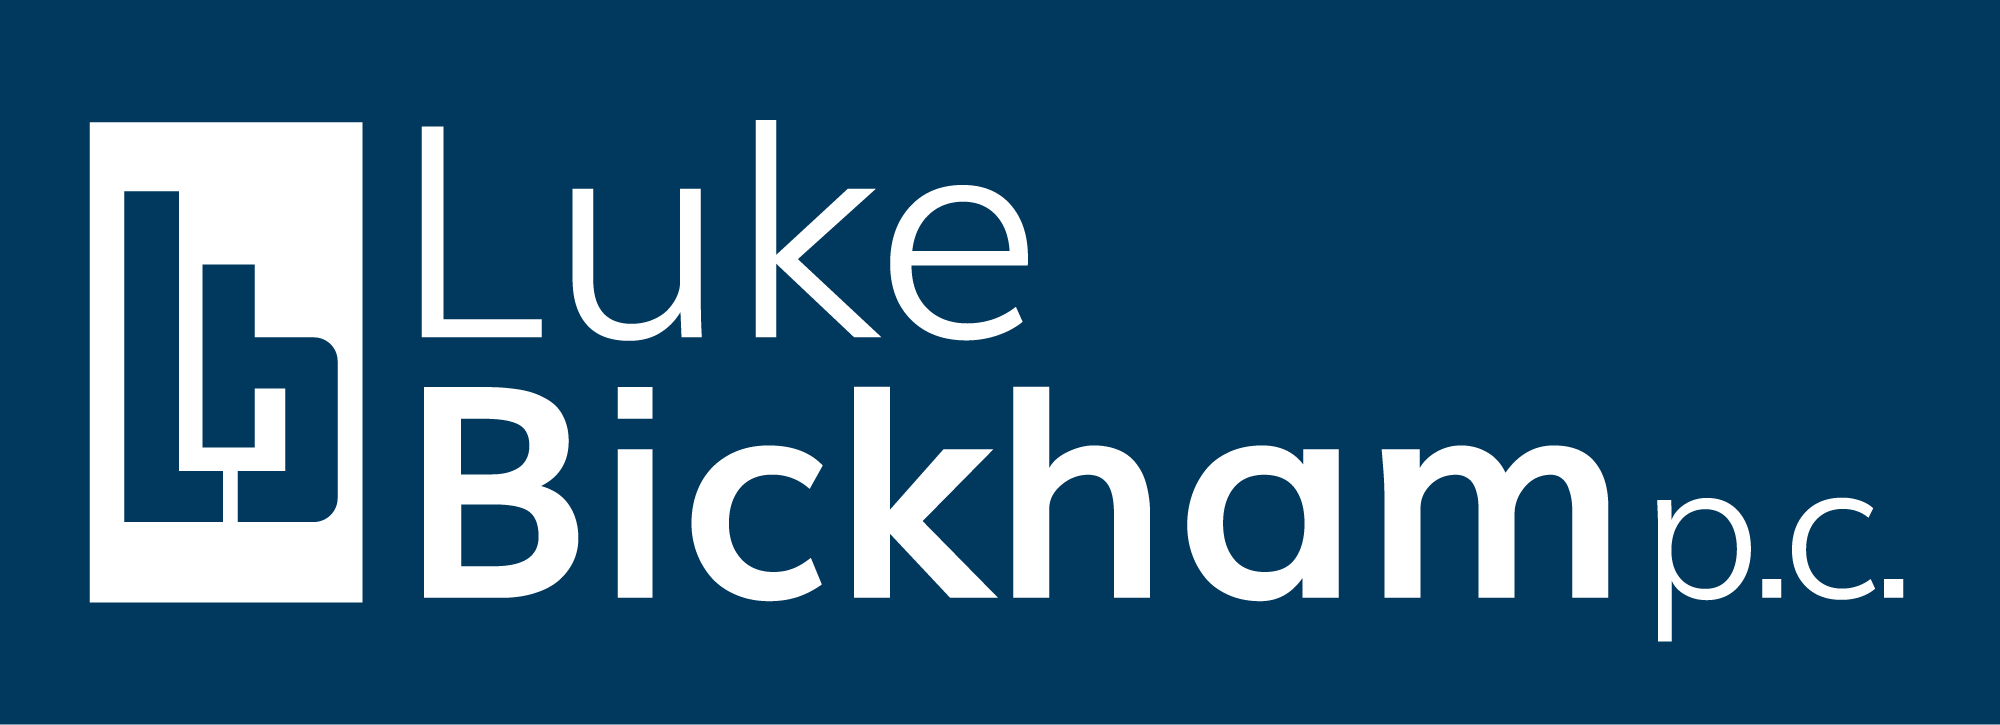 Luke Bickham PC